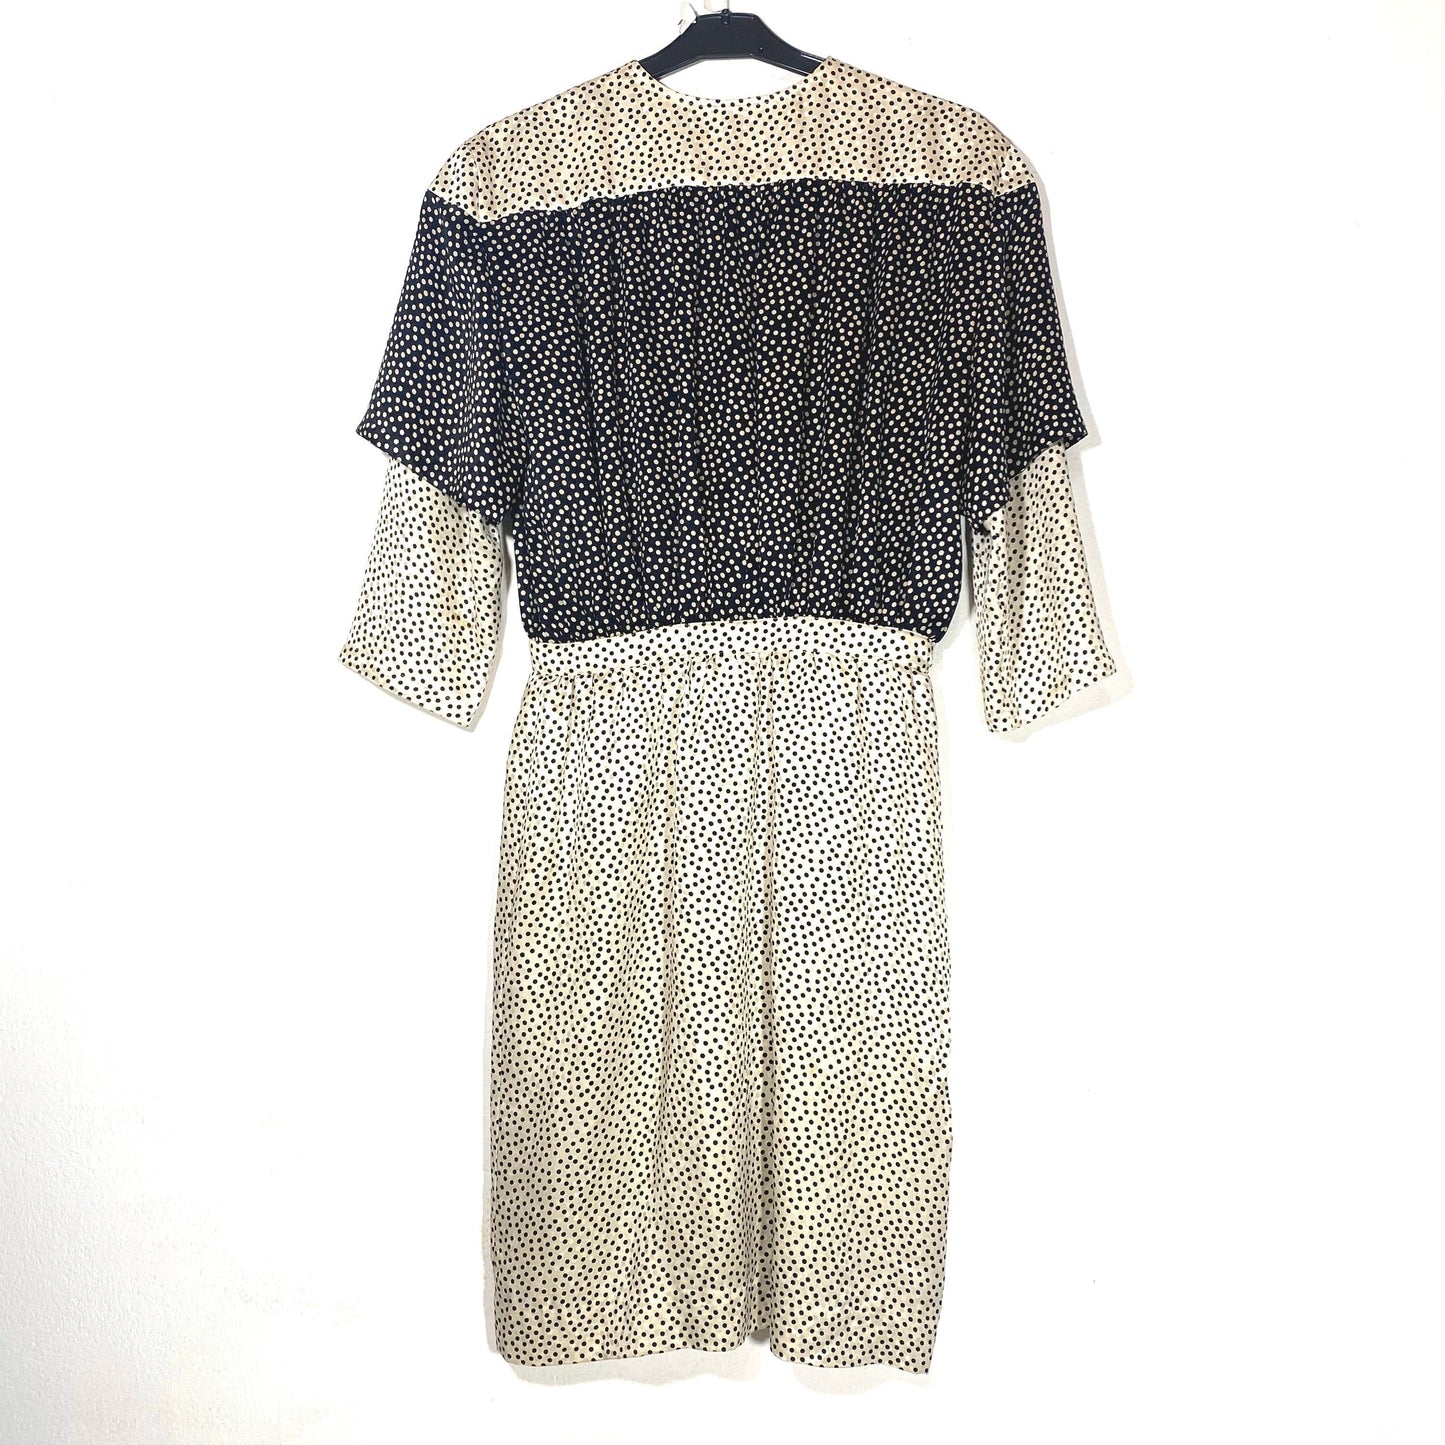 Kitai Como 60s pure silk black/white ecru polka dot blouson dress, mint condition.